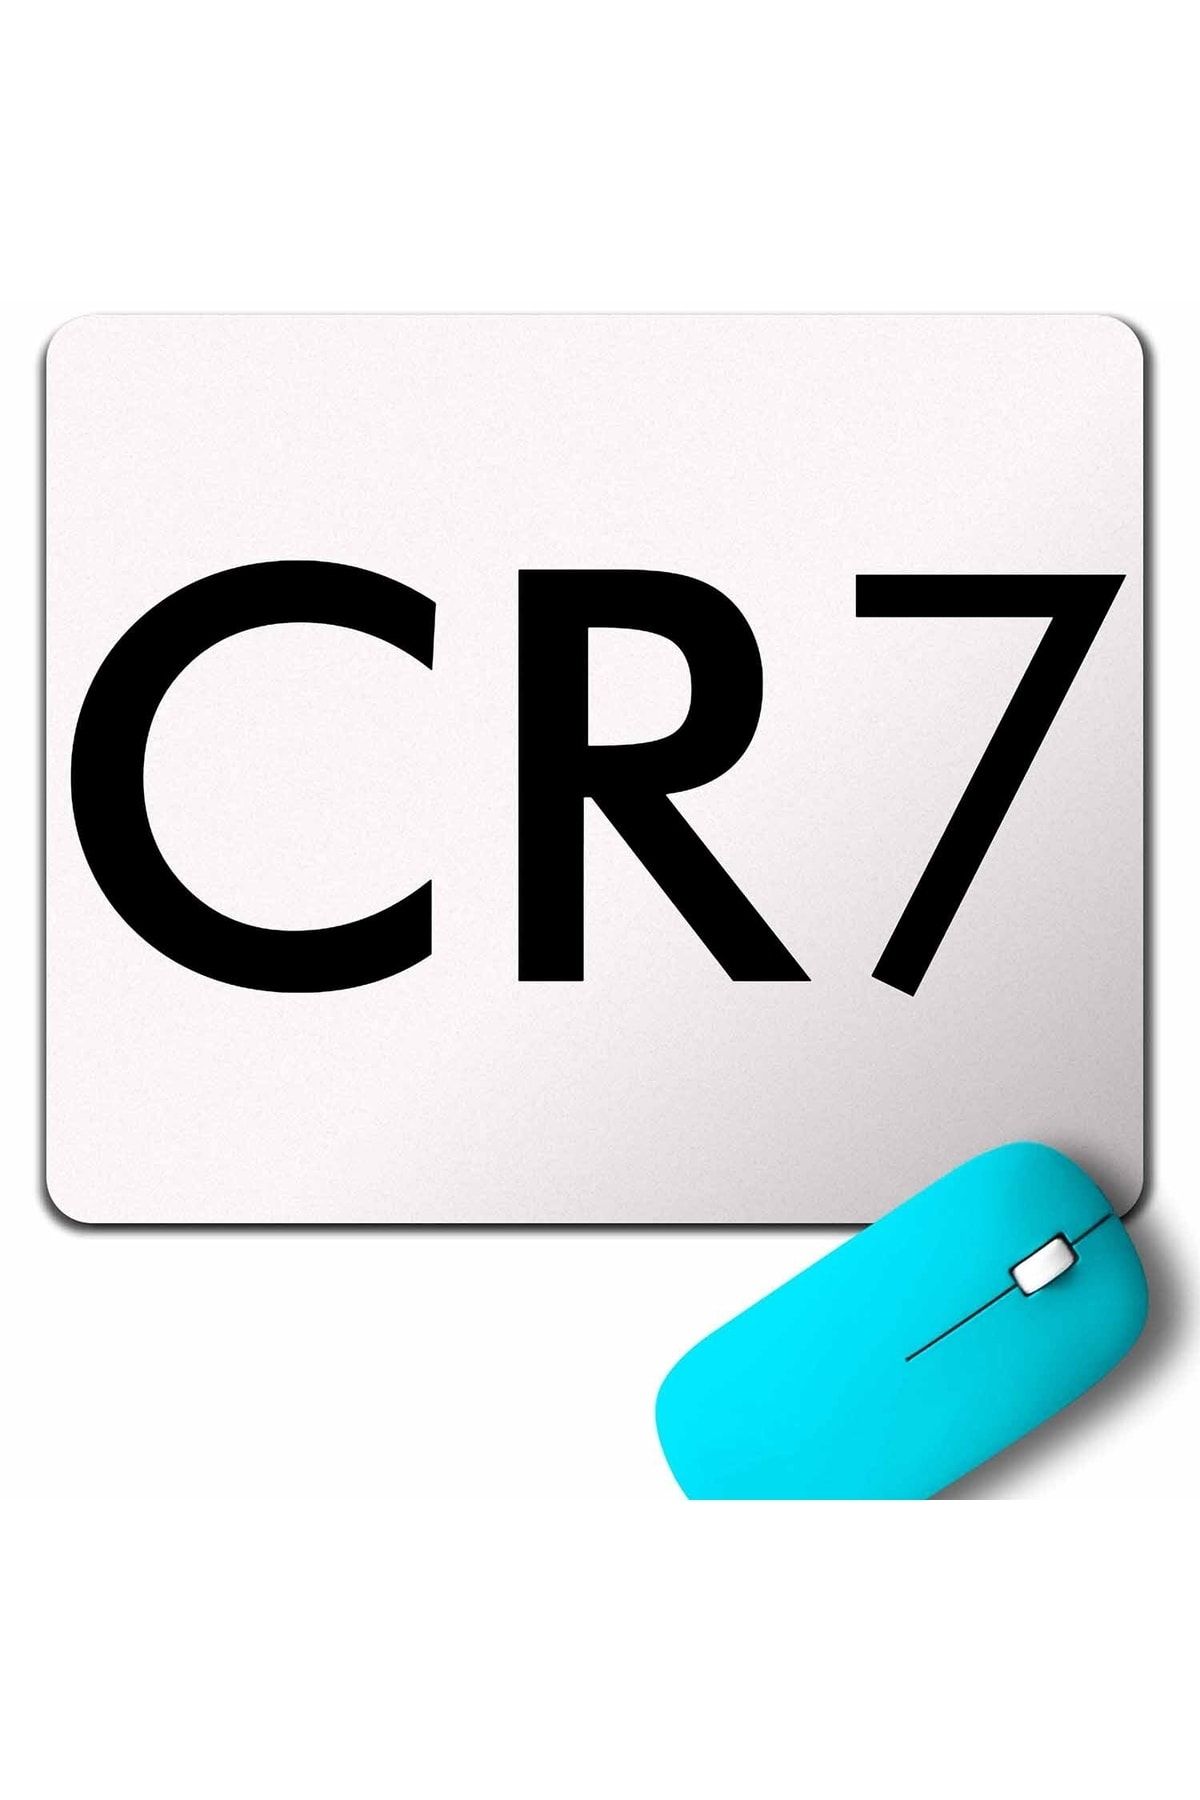 Cr7 logo | Cristiano ronaldo juventus, Cristiano ronaldo, Ronaldo juventus